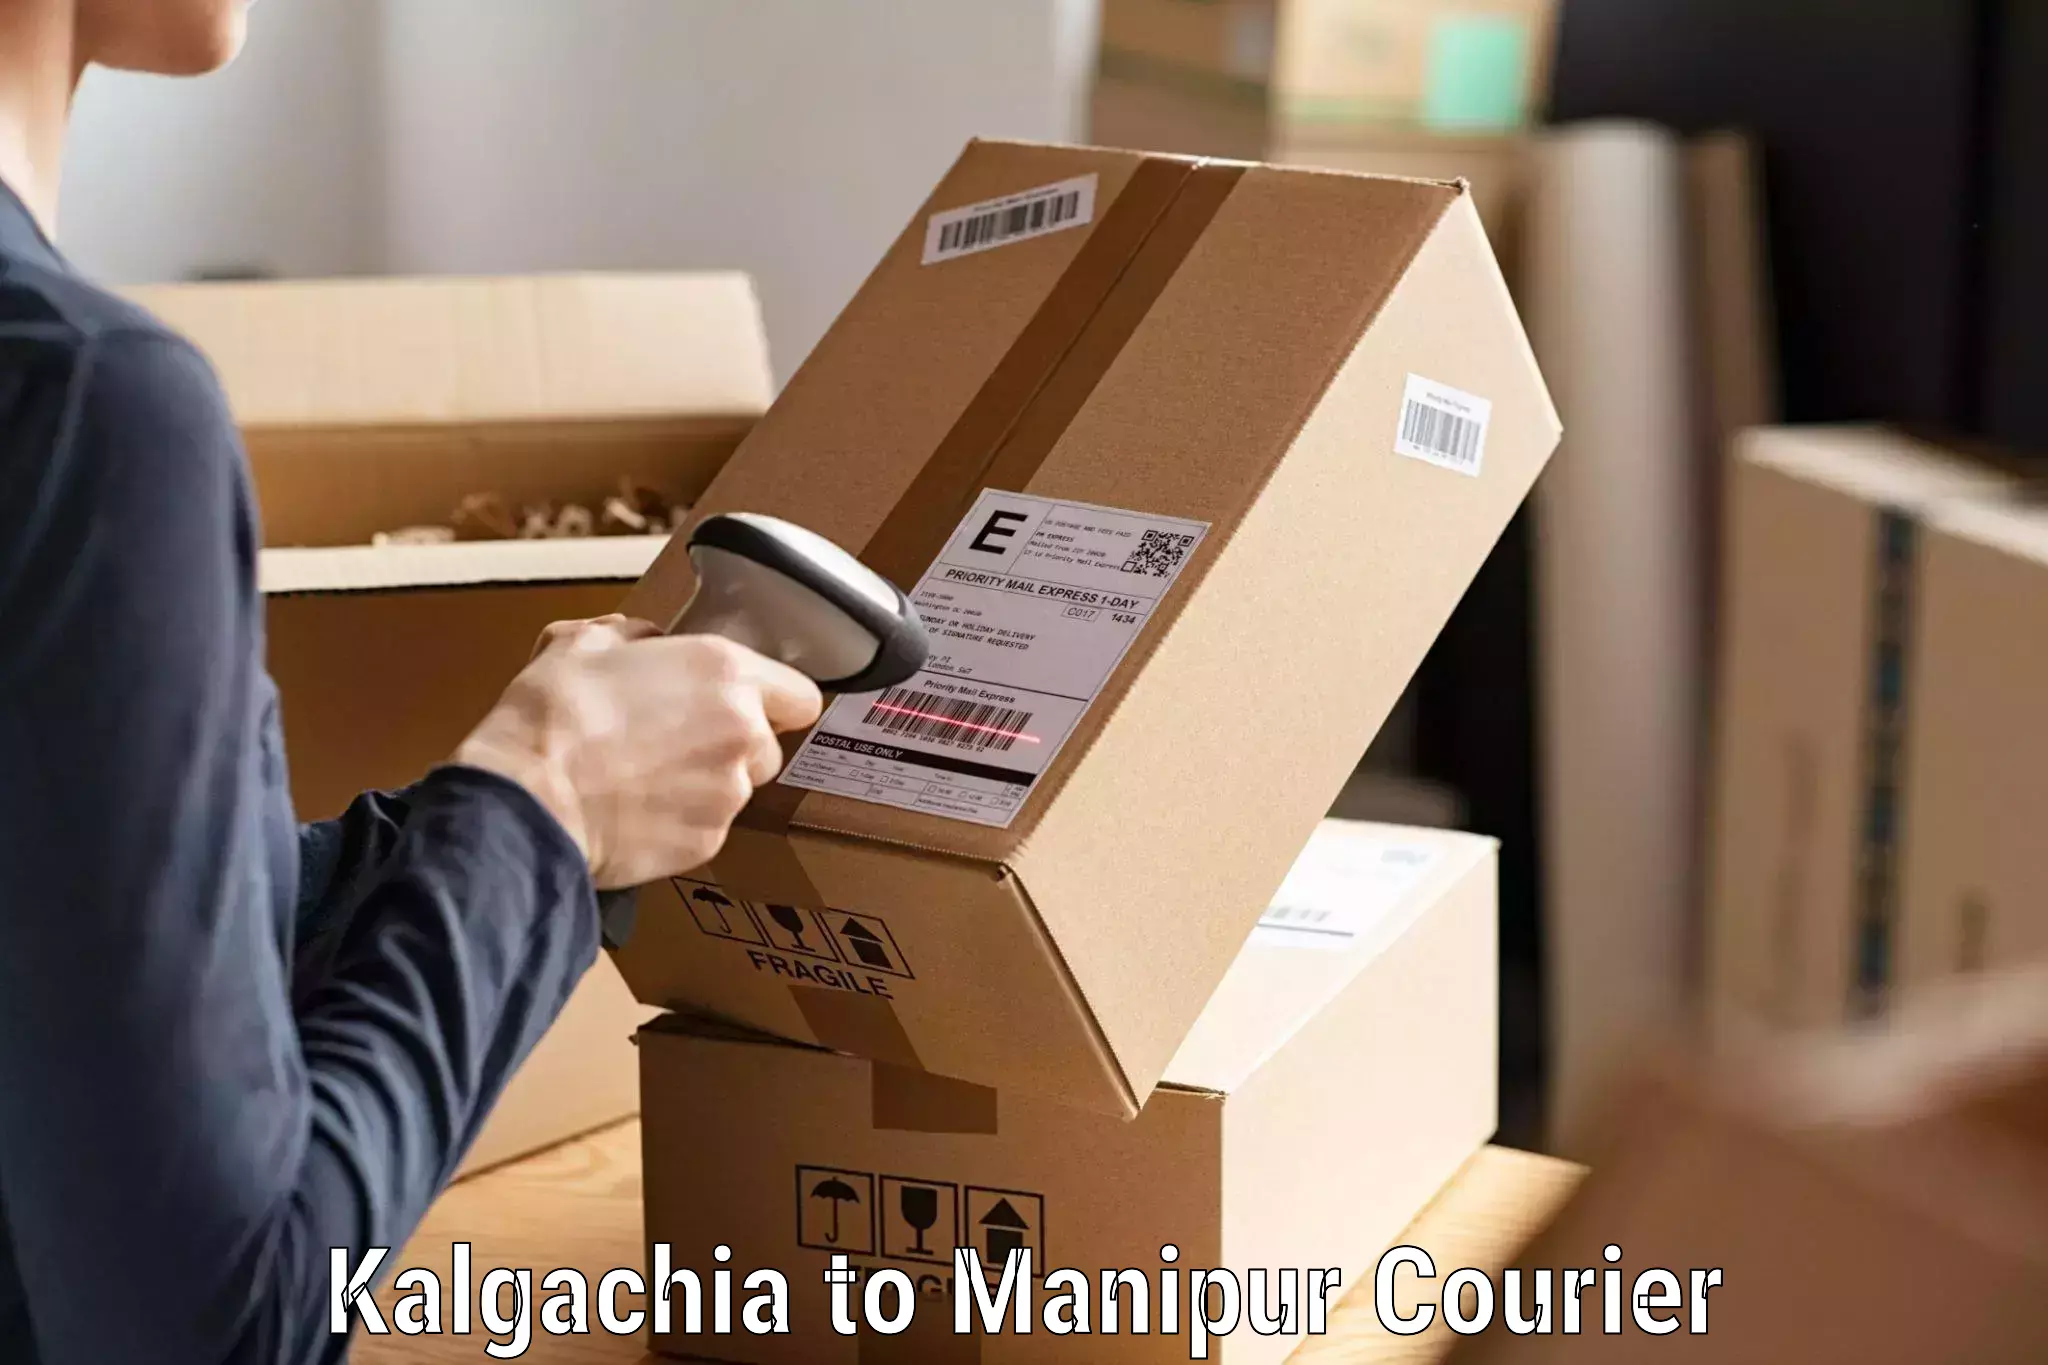 Courier service comparison Kalgachia to Moirang